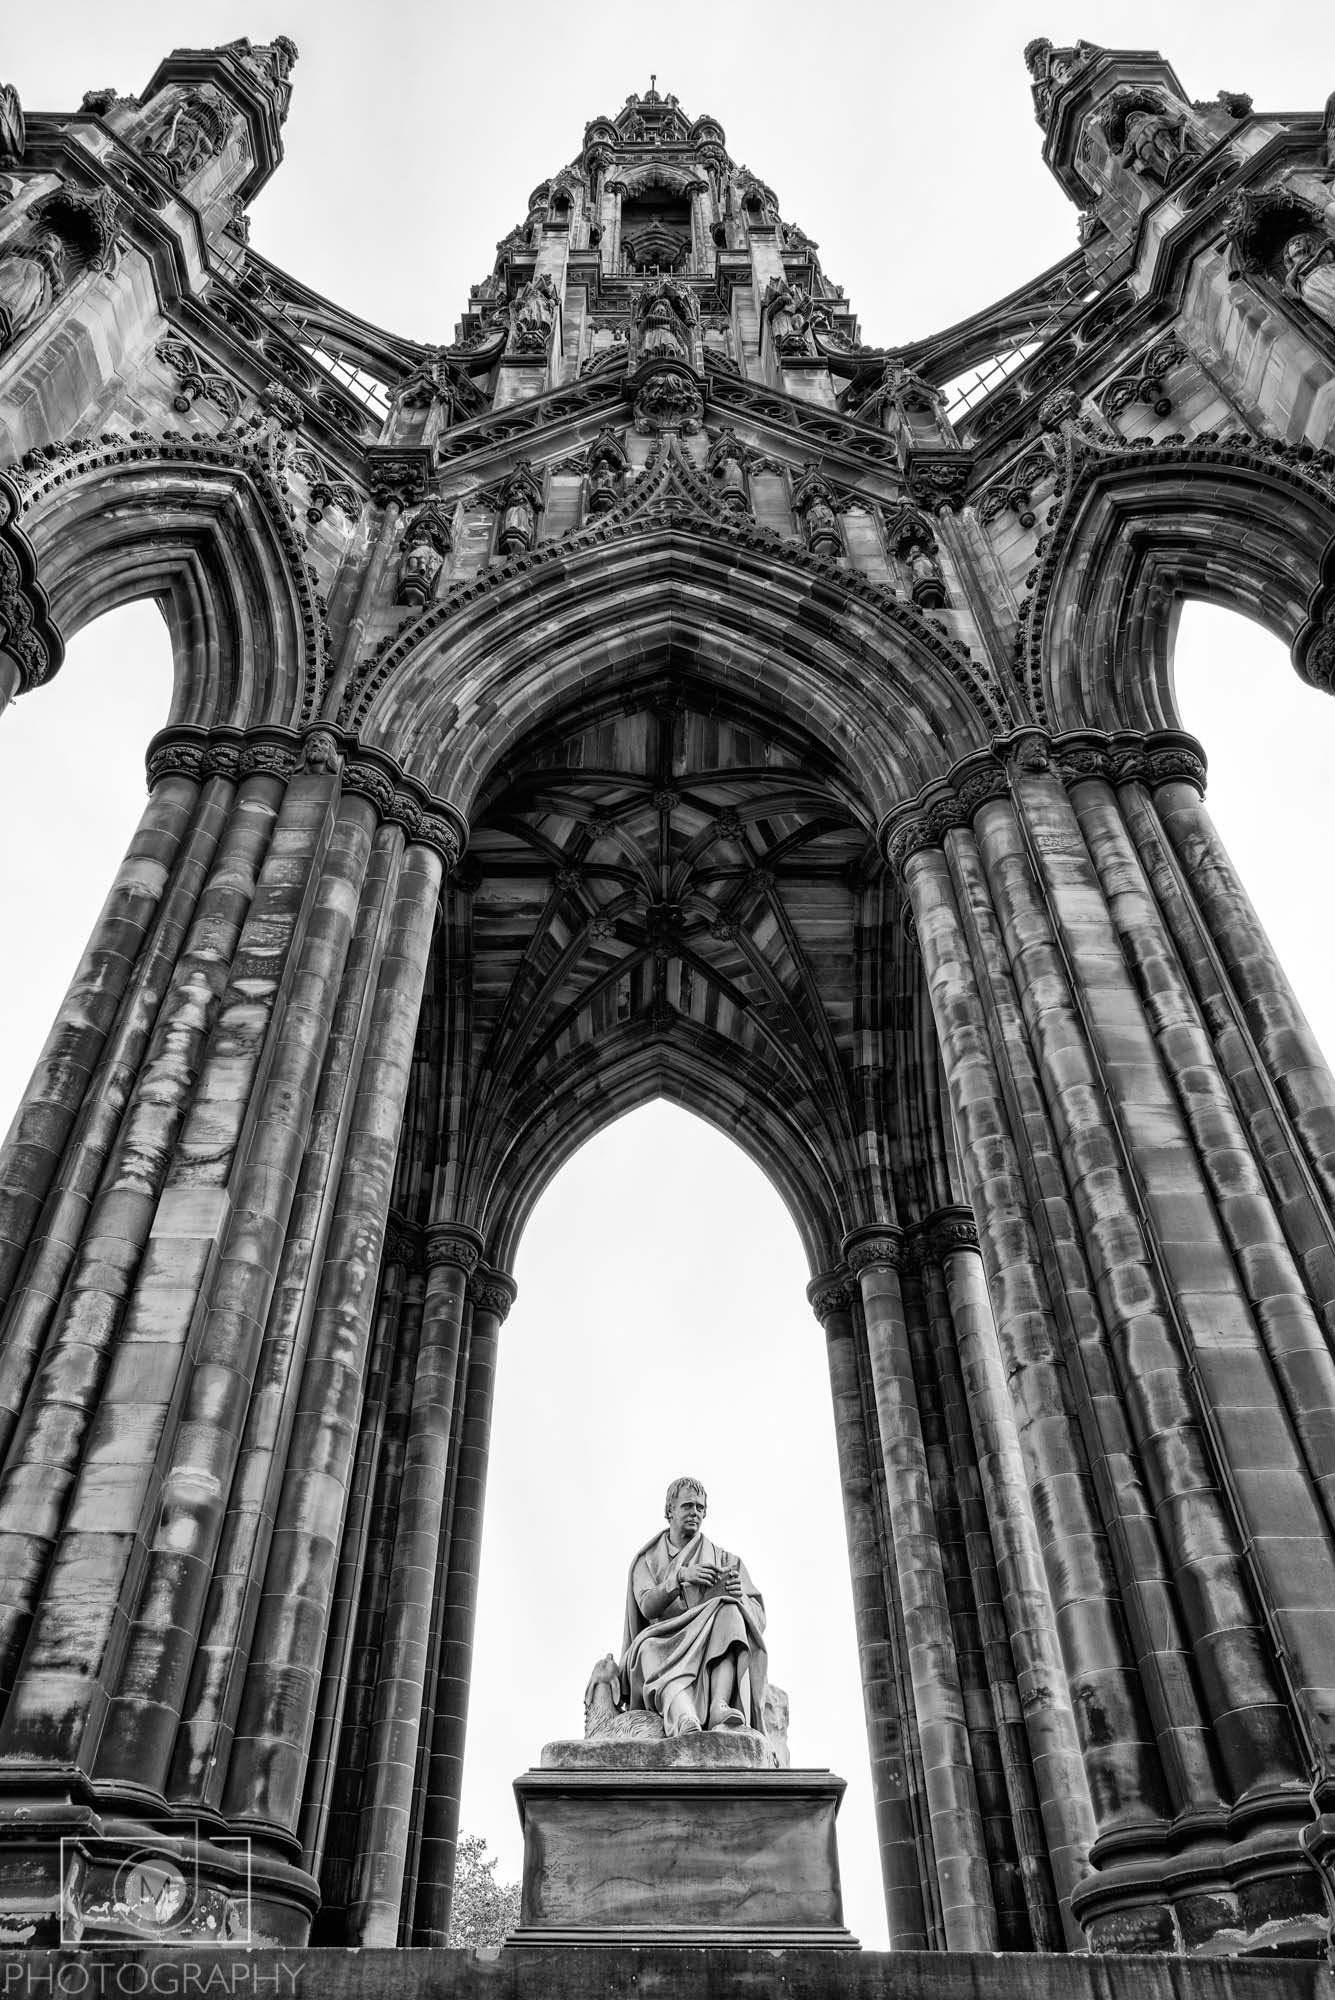 Pamätník Sira Scotta, Edinburgh - Scotland